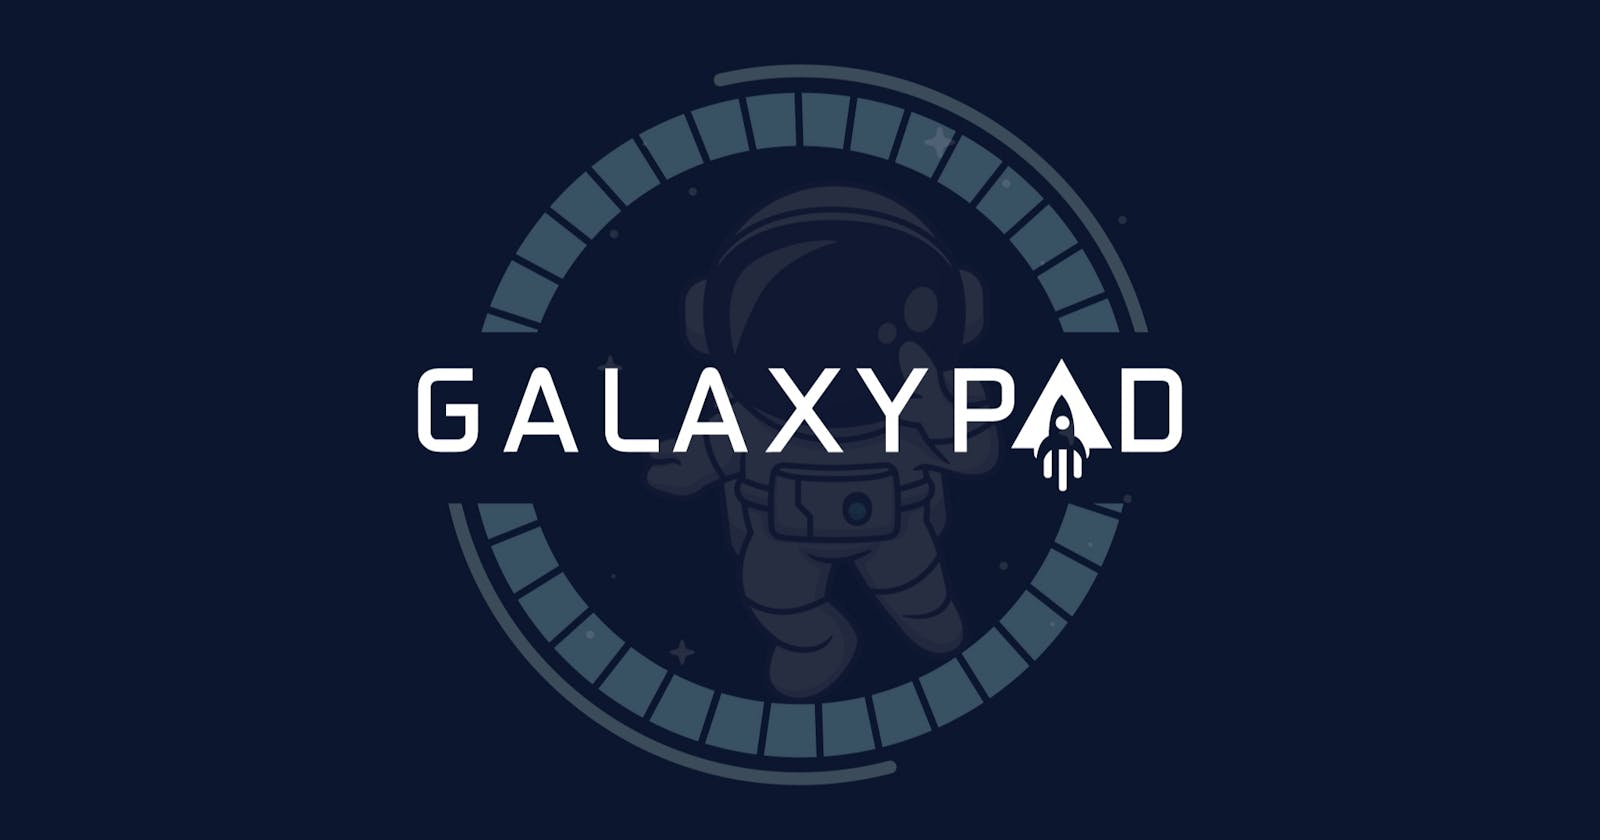 Galaxypad: The New Big Thing